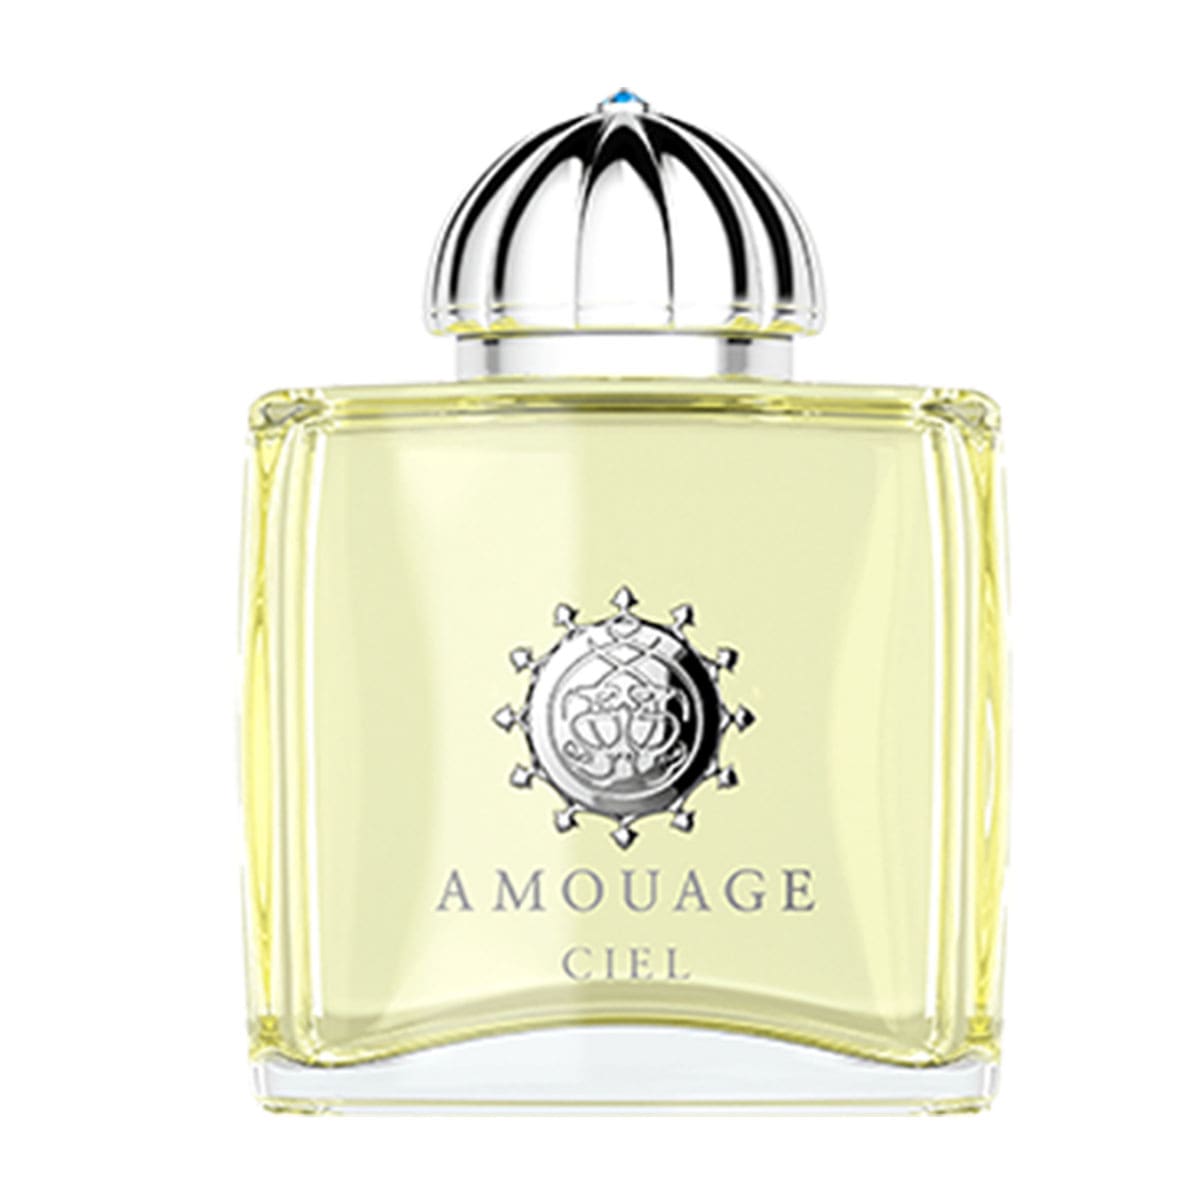 Amouage Ciel For Women Perfume Edp 100Ml